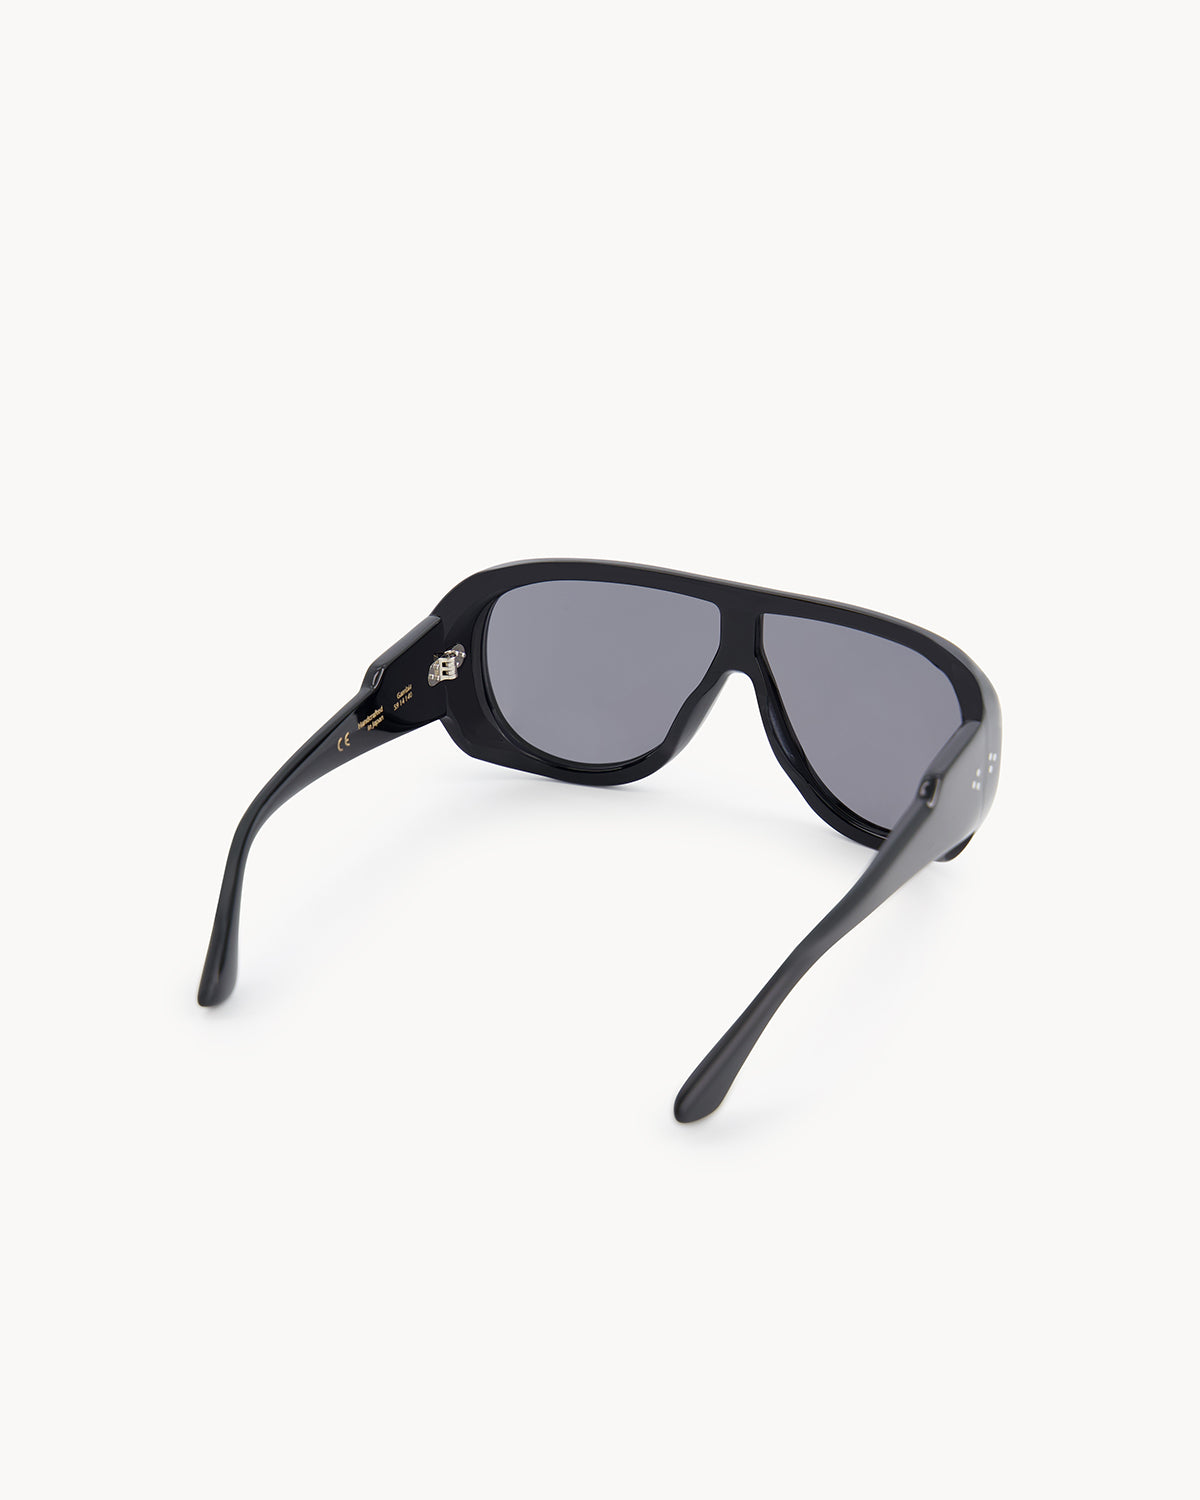 Port Tanger Gambia Sunglasses in Black Acetate and Black Lenses 3